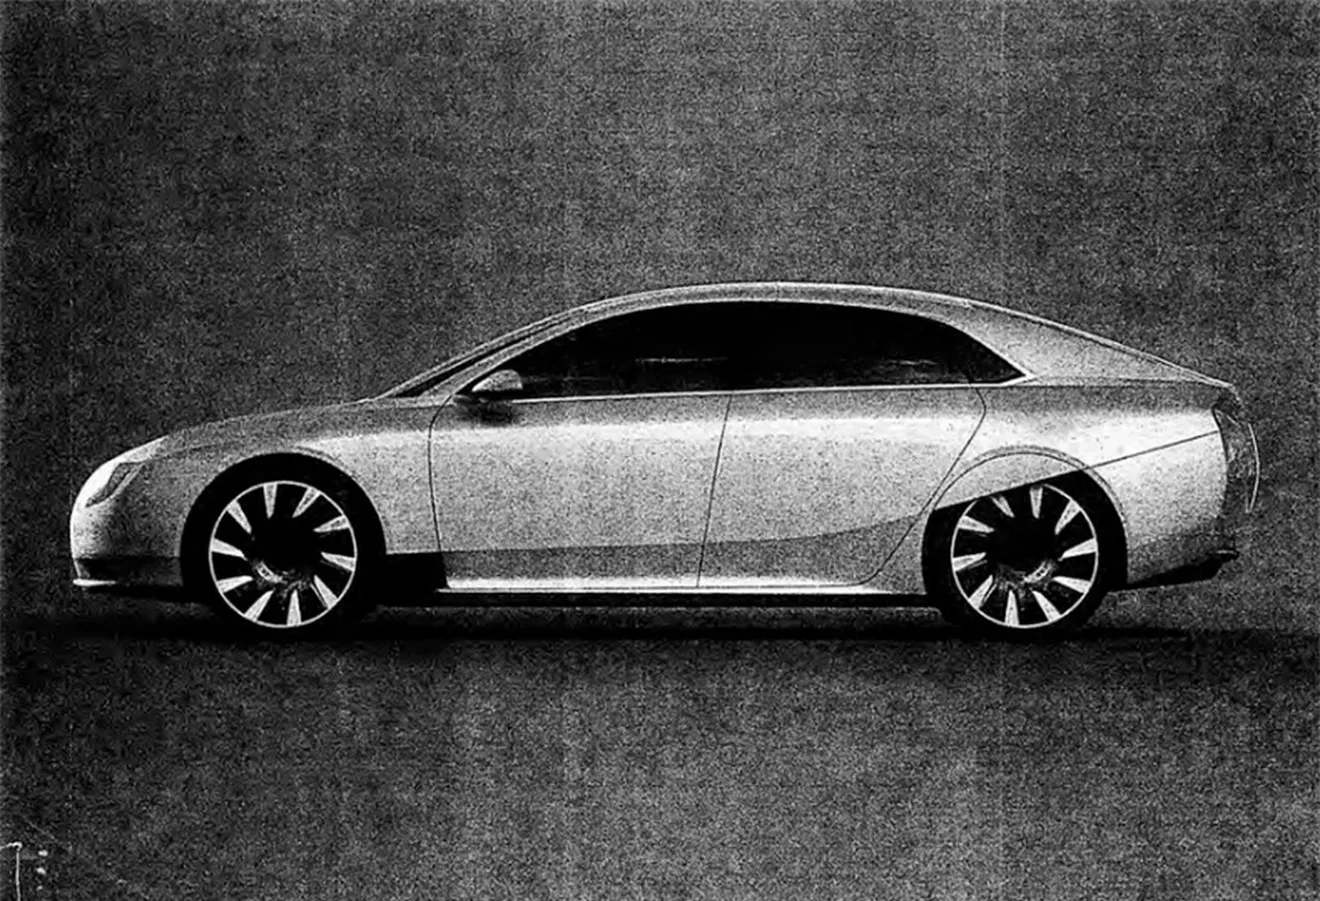 Atieva Atvus: se filtra la primera imagen del futuro rival del Tesla Model S